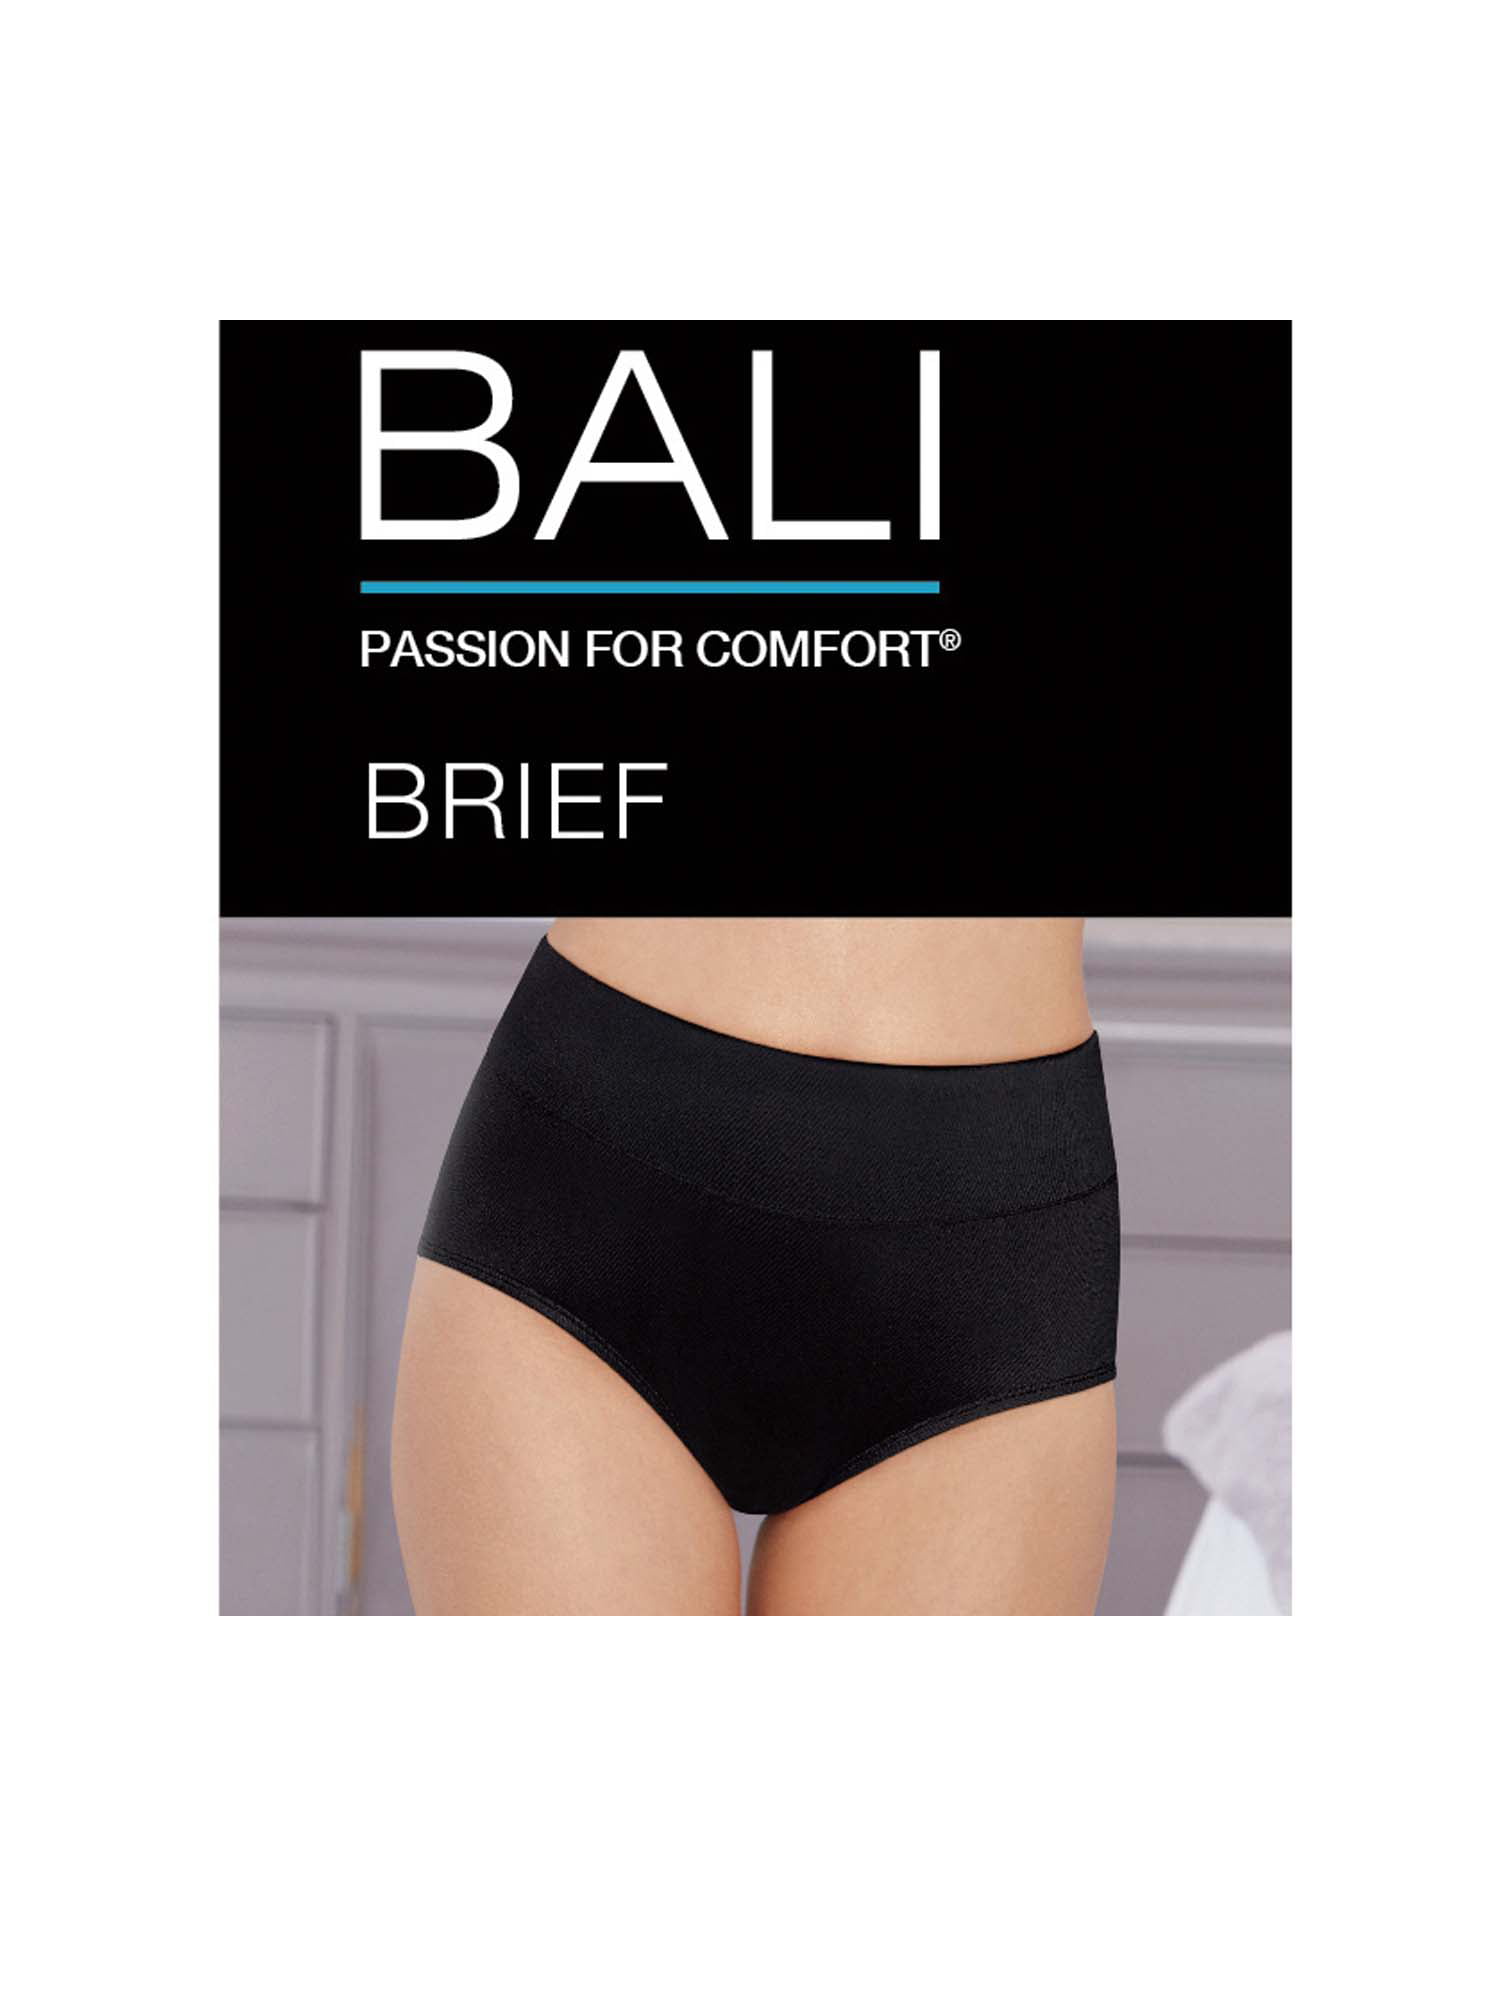 Bali Women's Passion for Comfort Brief Panty - DFPC61 